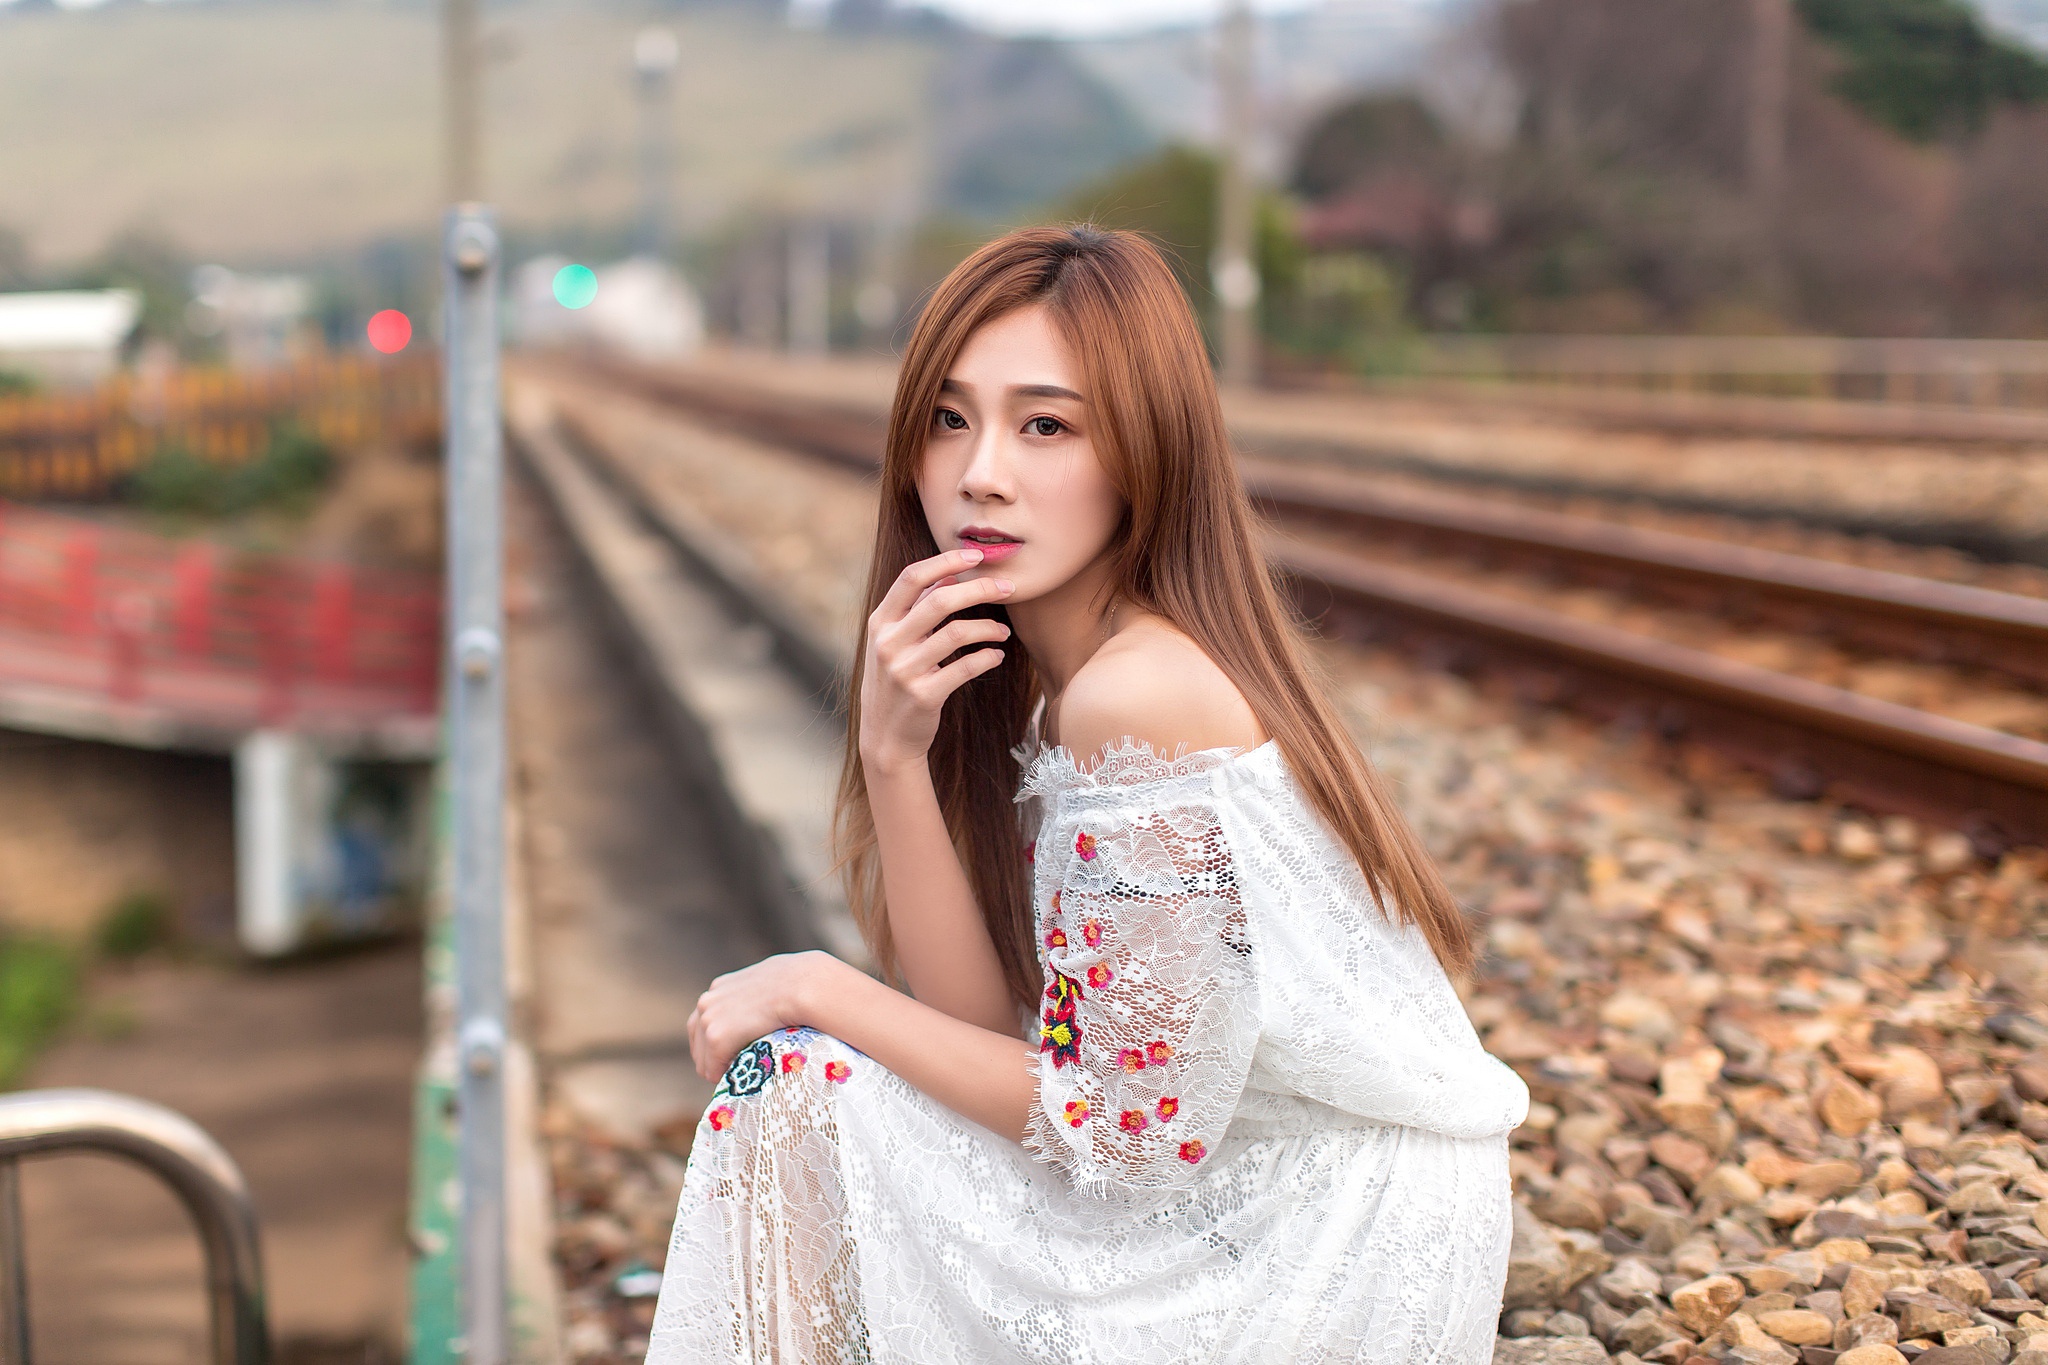 Asian Women Model Brunette Long Hair Urban Women Outdoors Depth Of Field White Dress Looking At View 2048x1365